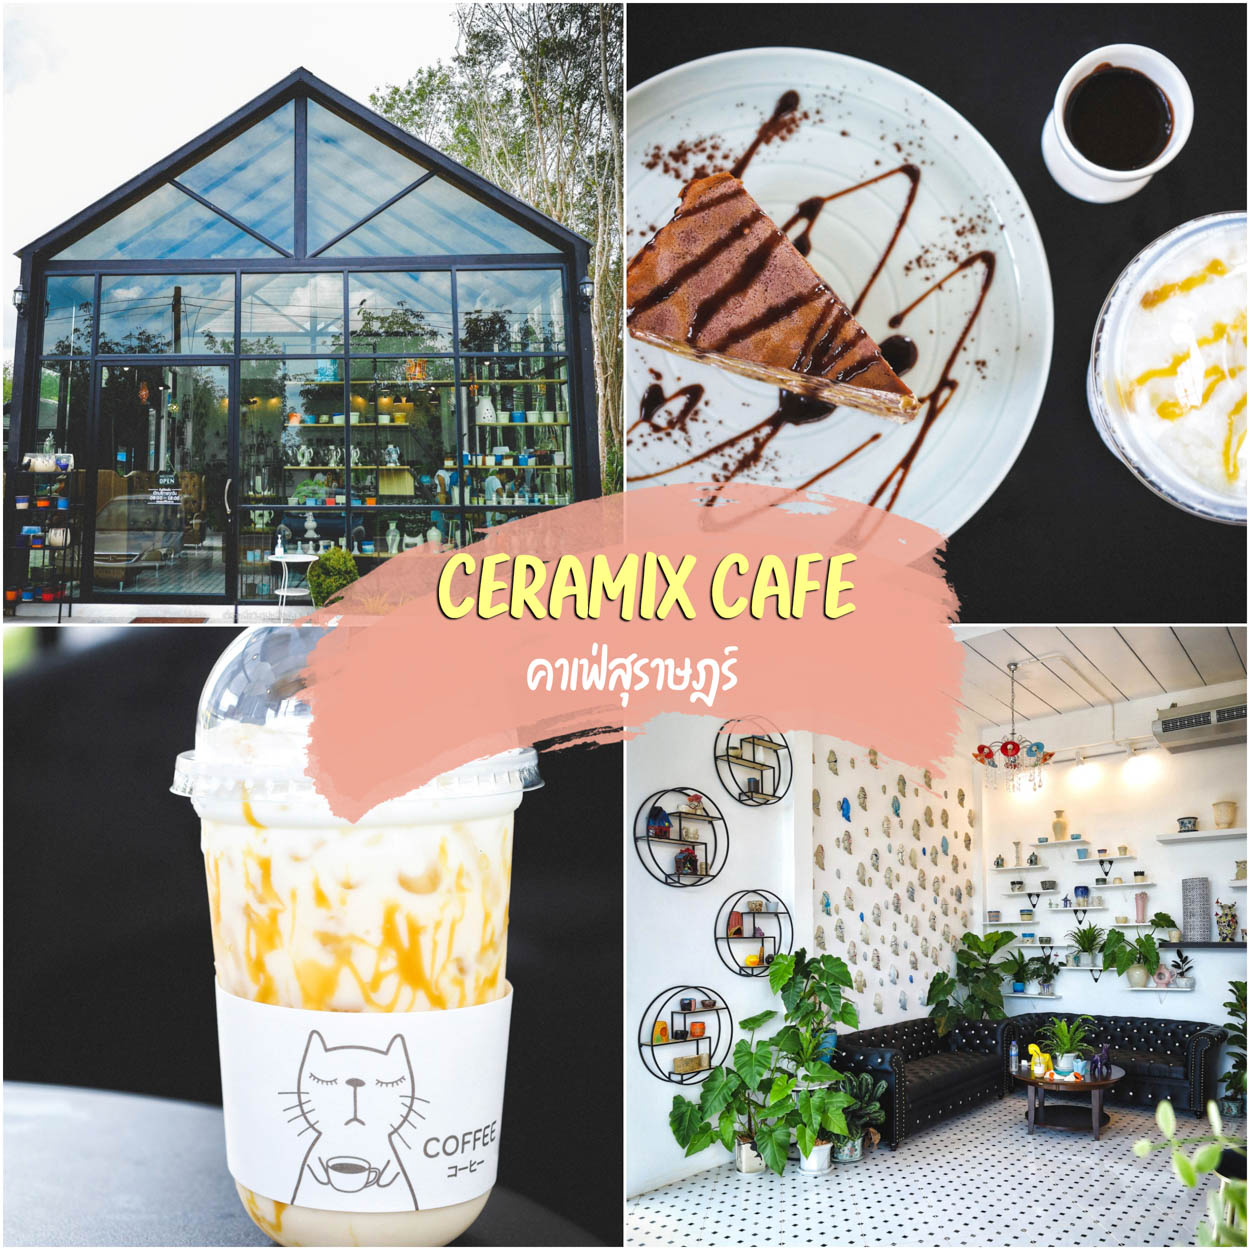 Ceramix cafe & Le grand ceramix  คาเฟ่สุราษฎร์ธานี ตกแต่งไปด้วยงานปั้นเซรามิกเก๋ๆ